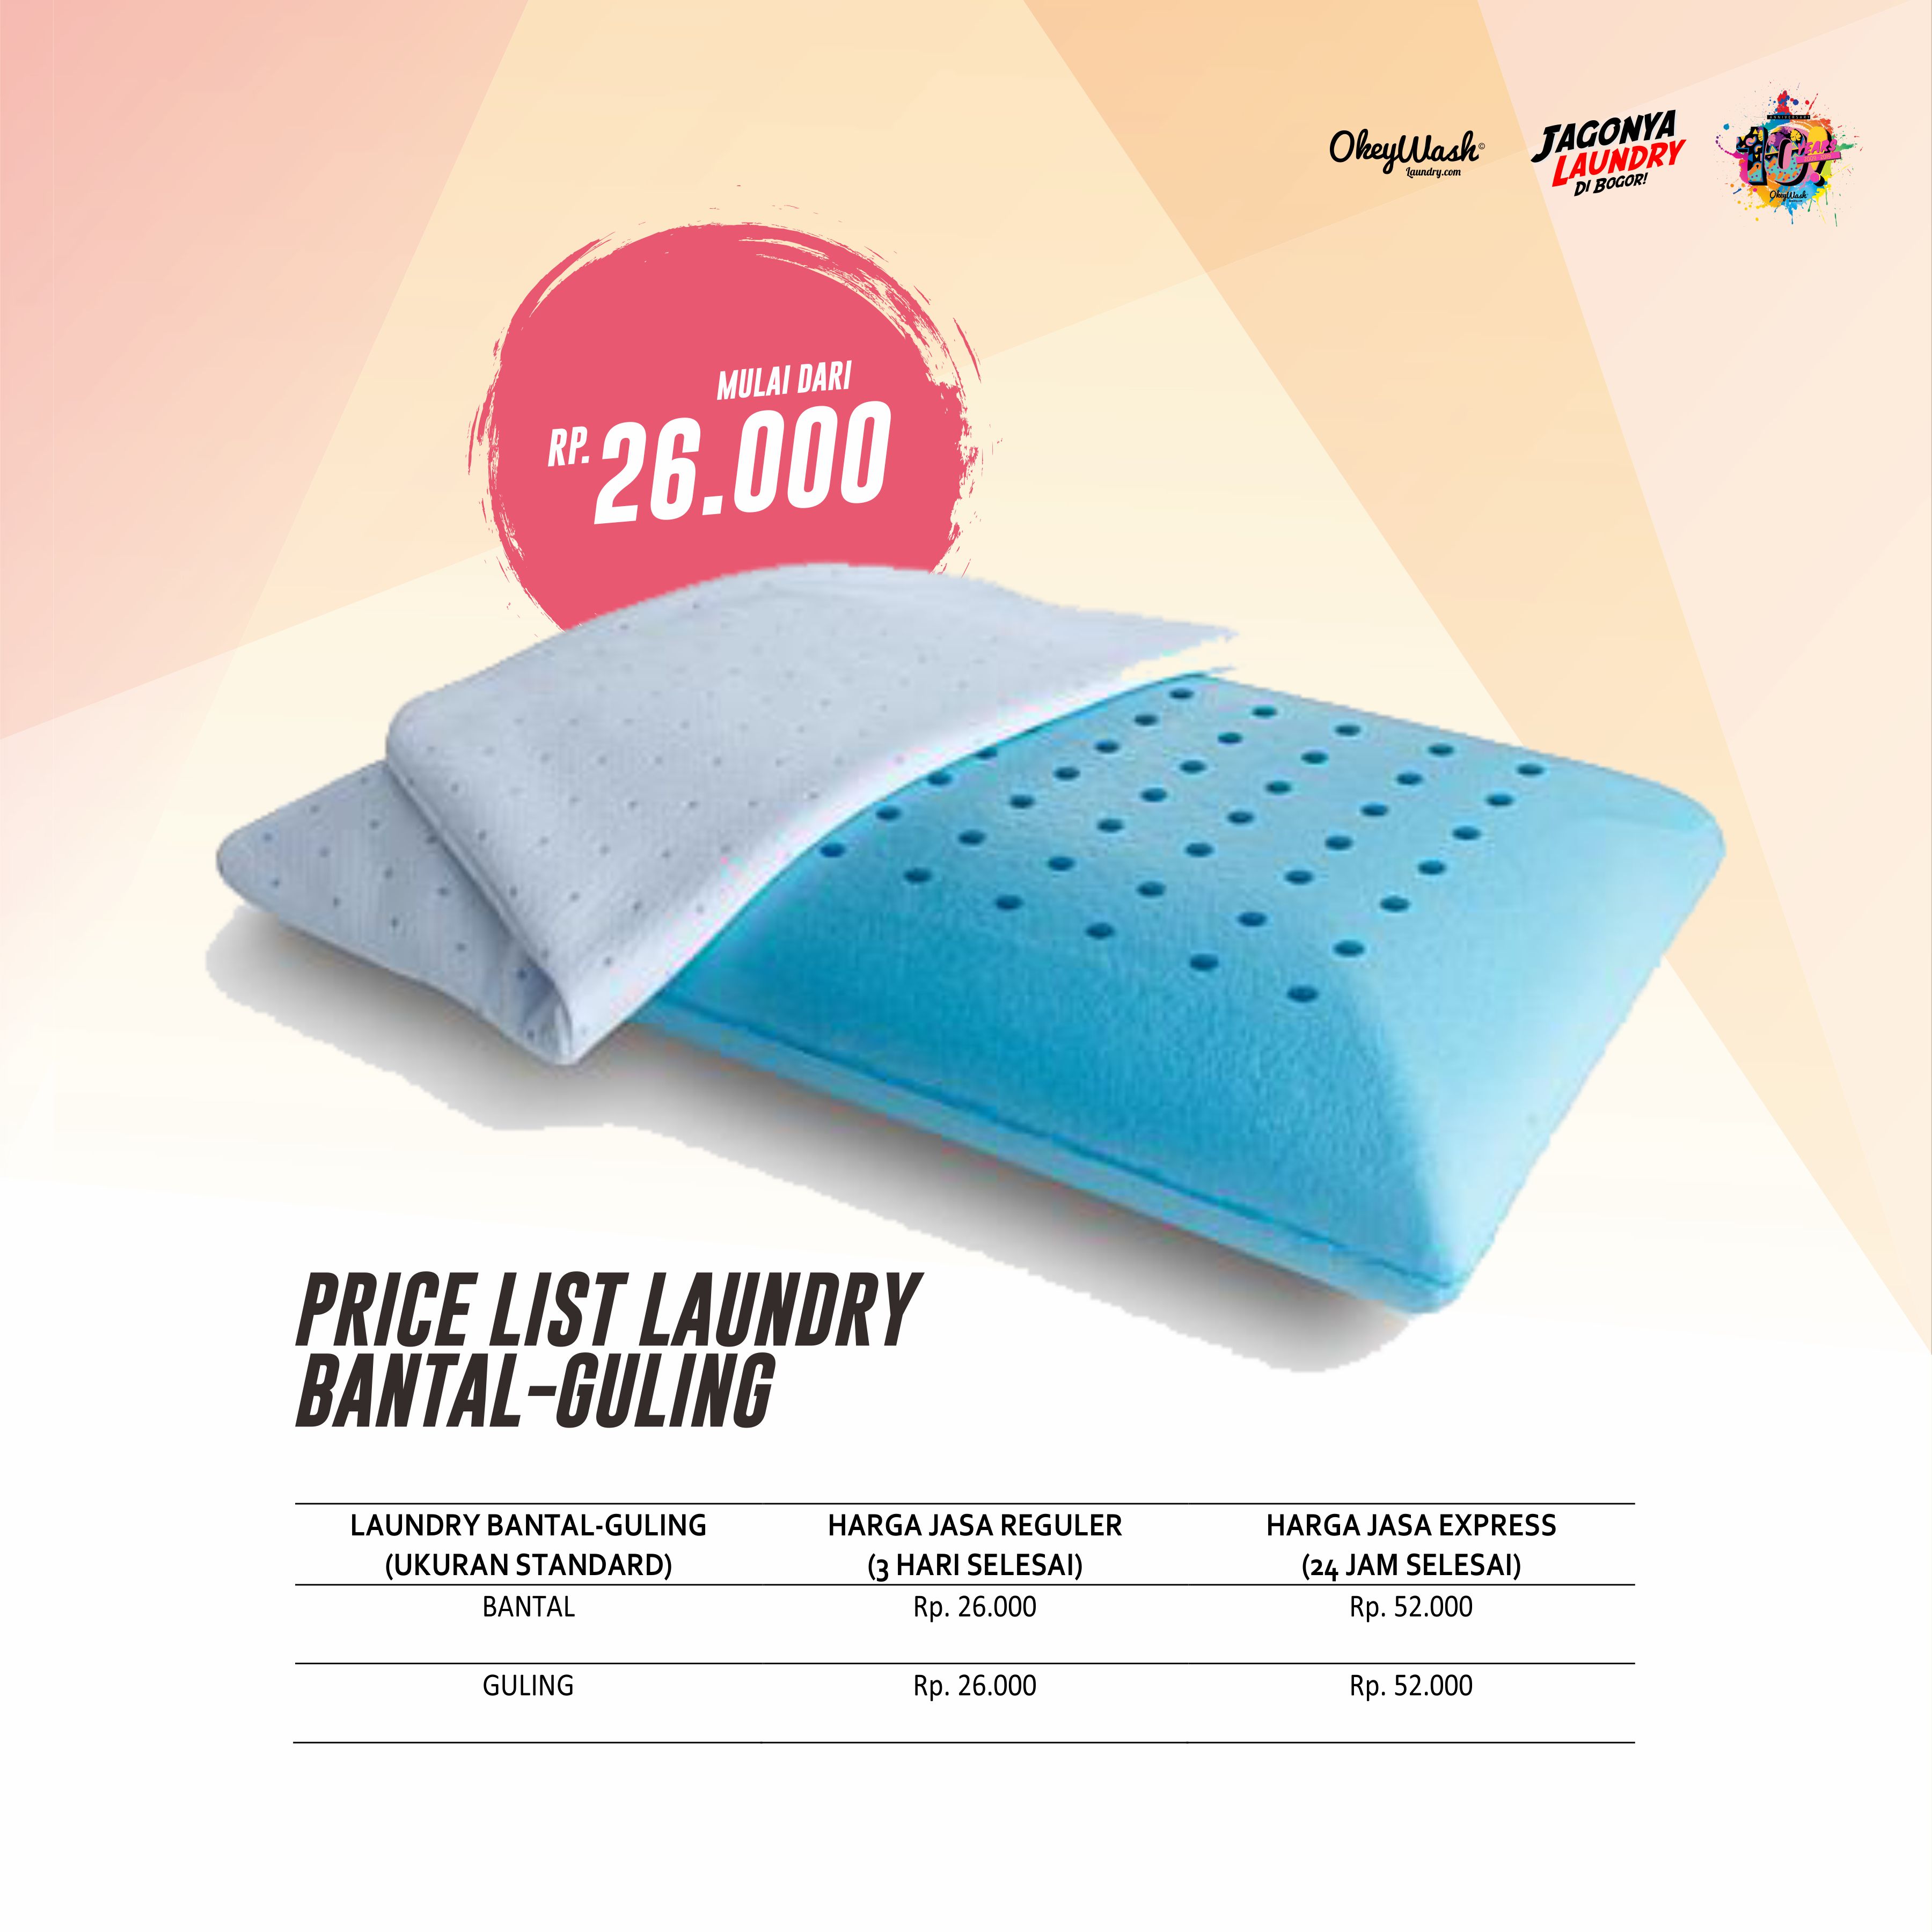 Price List Okey Wash Laundry 2019 - Laundry Bantal Guling